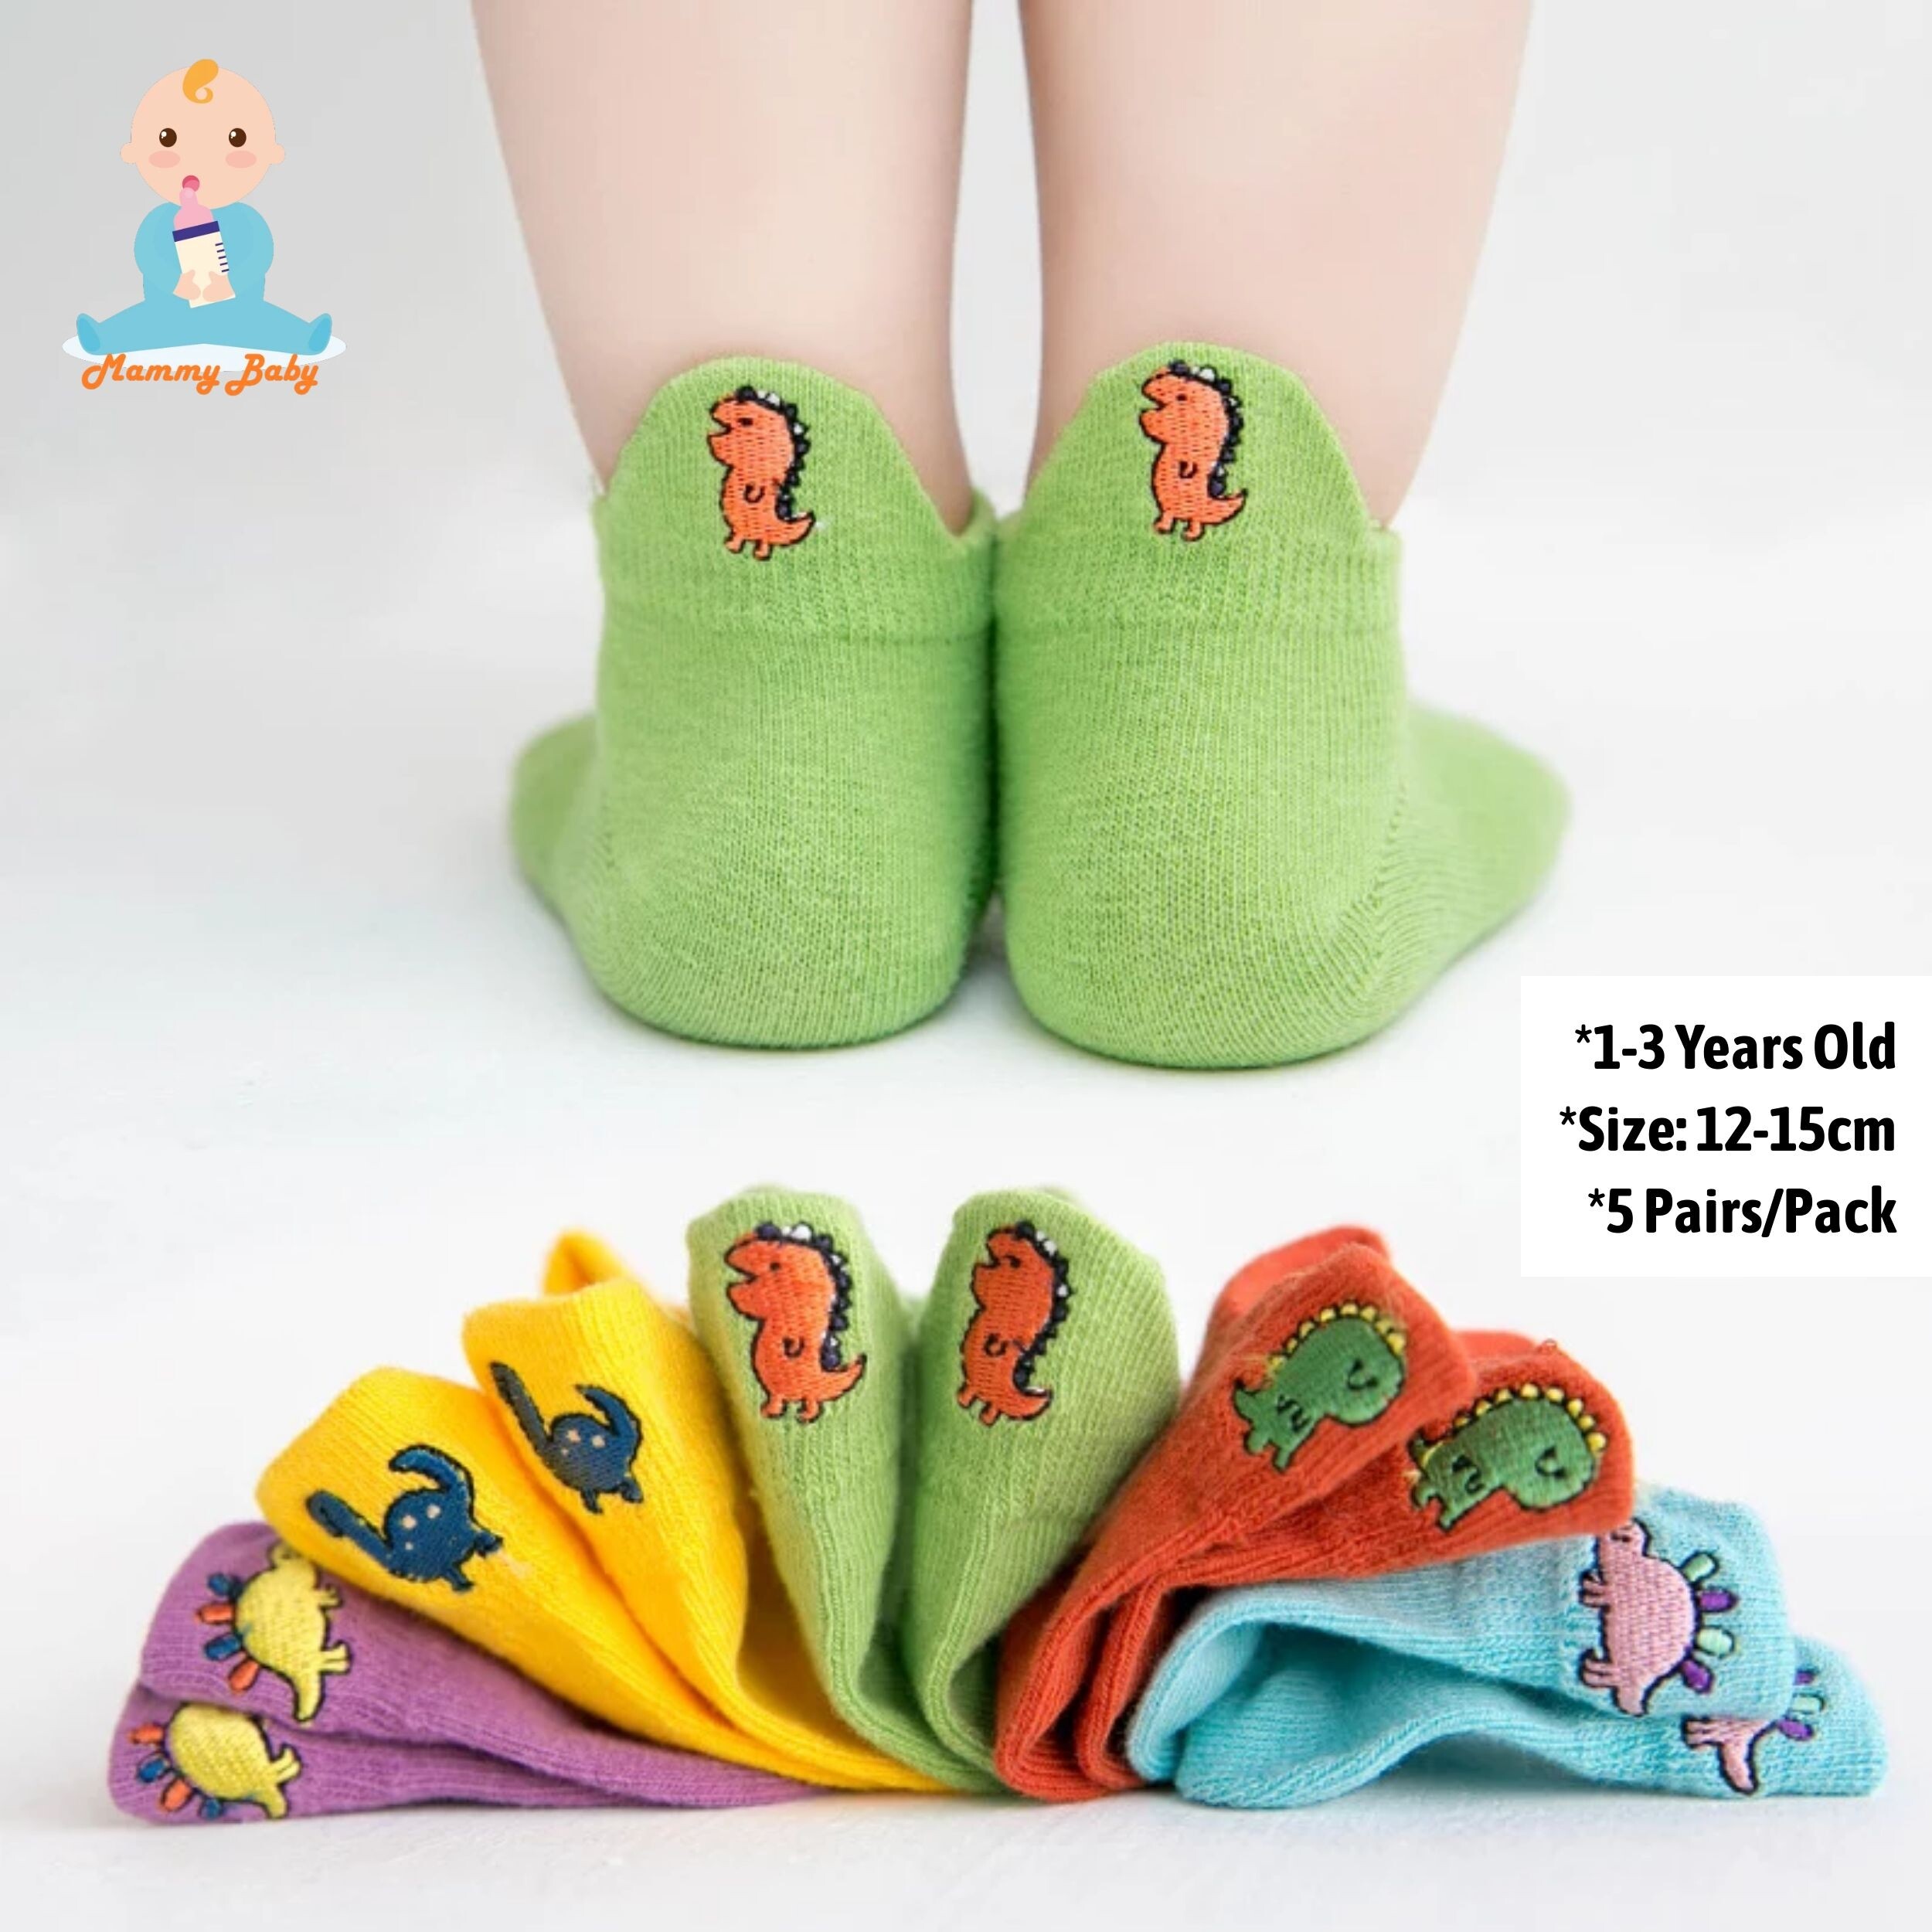 MAMMY BABY Boys & Girls Fashion Design Size-S (1-3ขวบ) ความยาว  S12-15cm ถุงเท้าเด็ก ถุงเท้าแฟชั่นถุงเท้า style เกาหลี 1เซต5คู่5สี (5 pair/pack )ระบายอากาศได้ดี ใส่สบาย